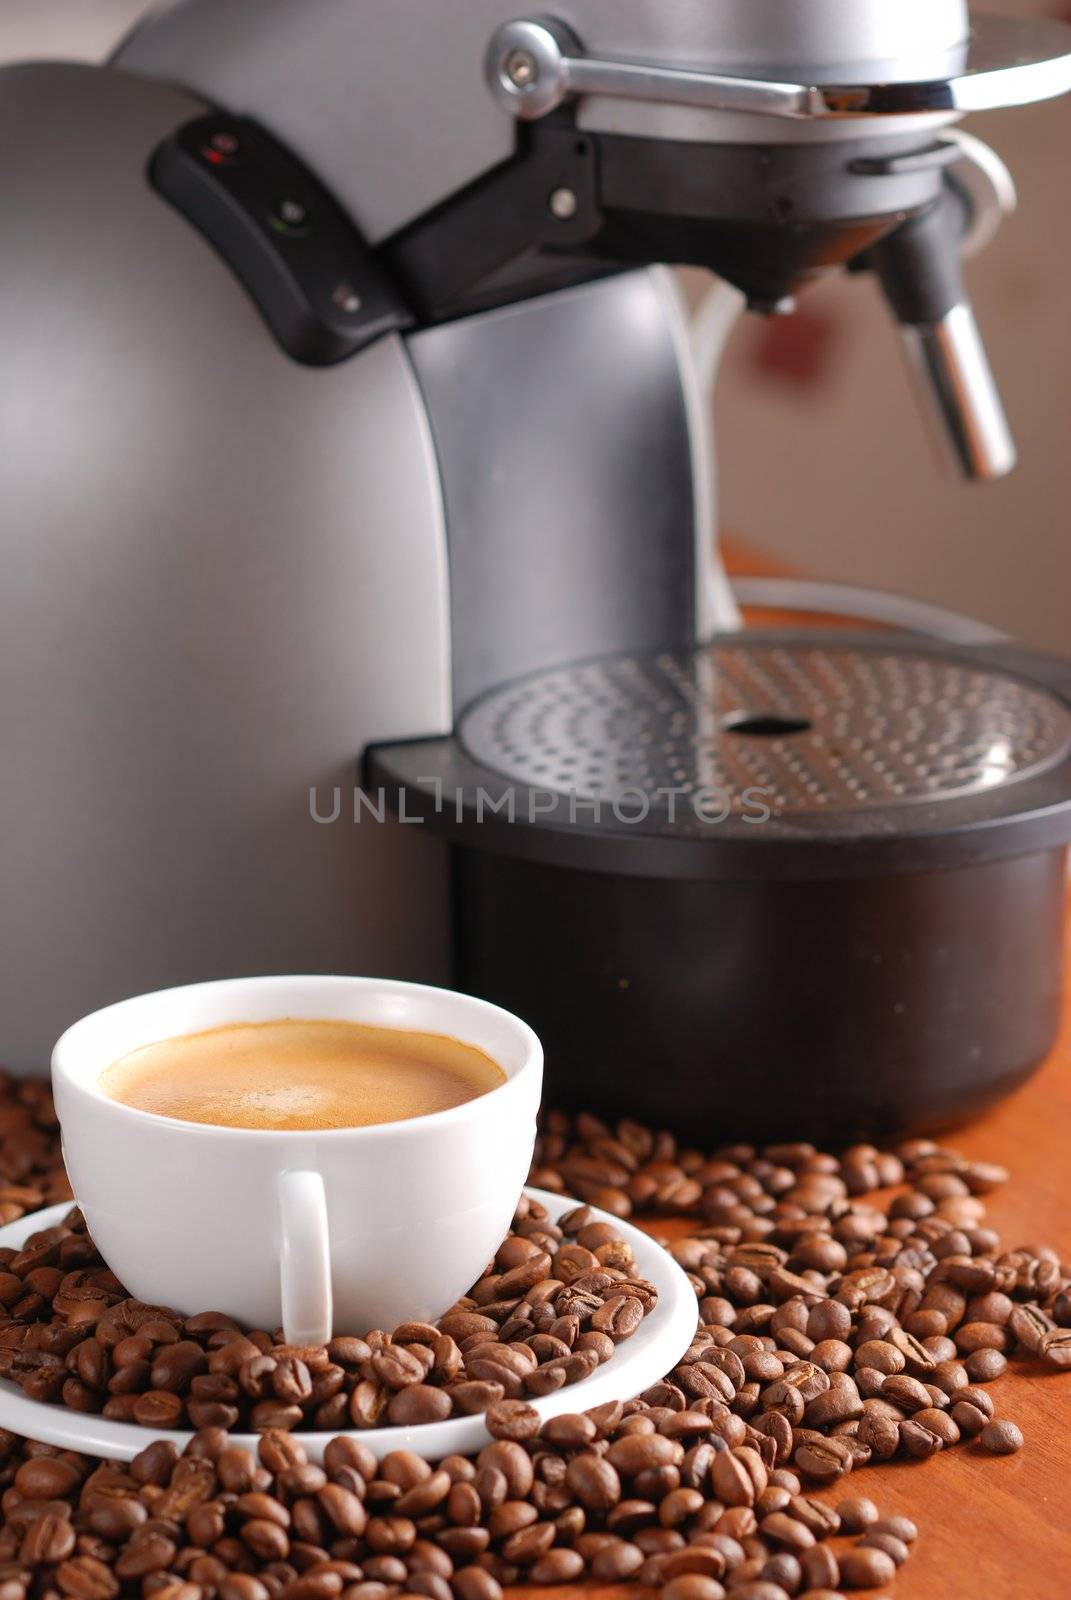 Coffee machine by haveseen